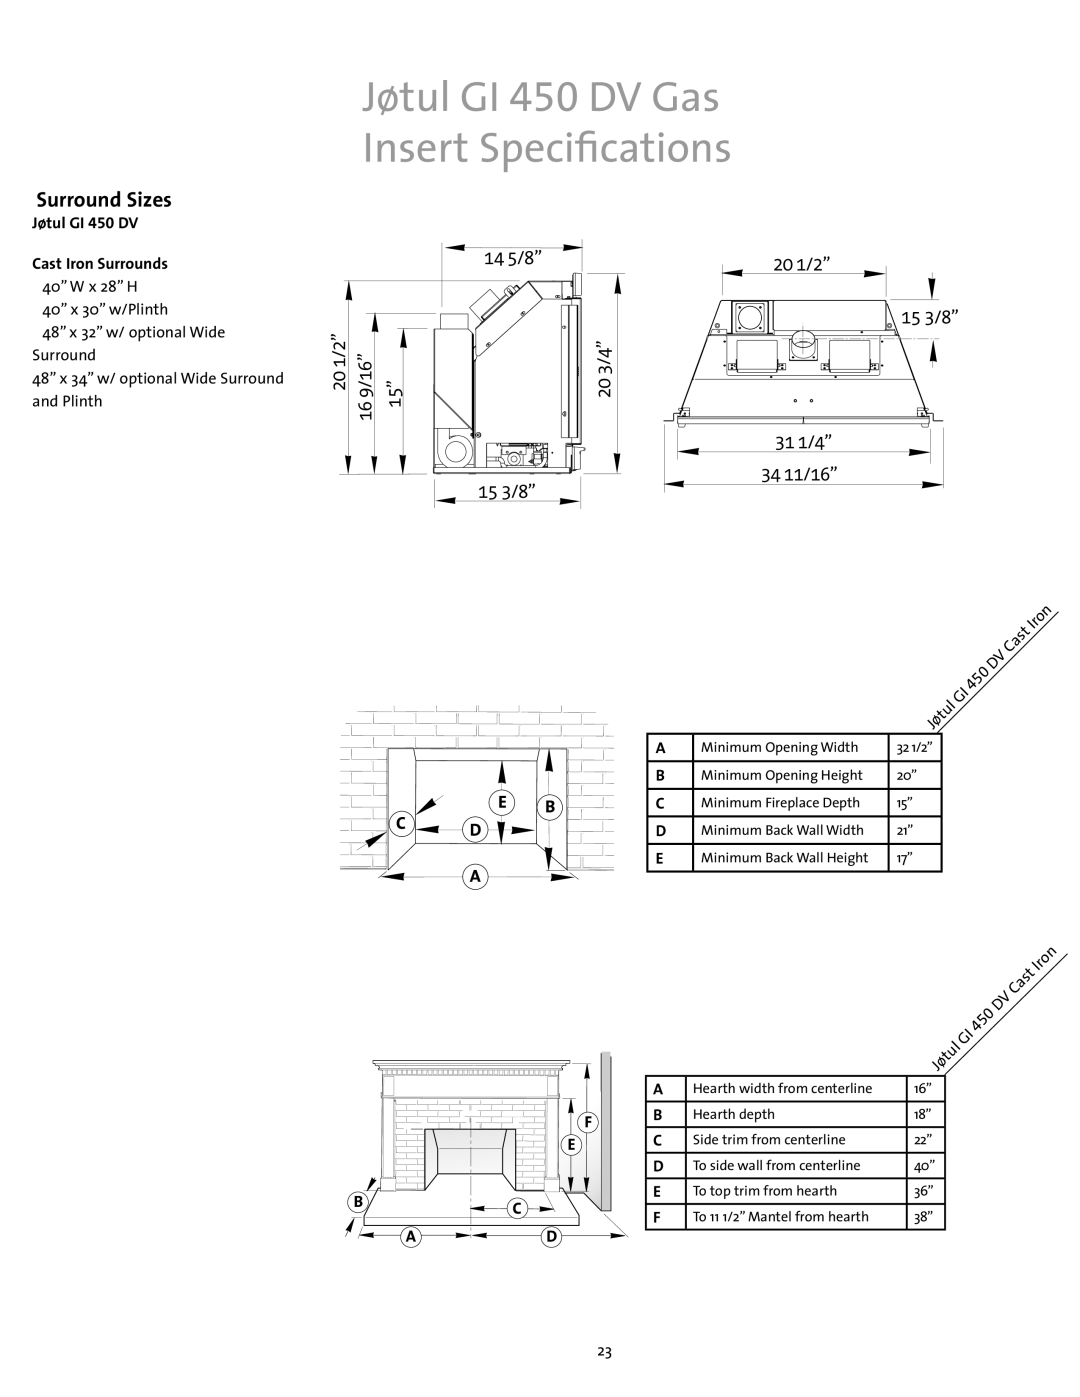 Jotul Gas Inserts and Fireplaces Jøtul GI 450 DV Gas Insert Specifications, Surround Sizes, 20 1/2”, 16 9/16”, E B C D A 